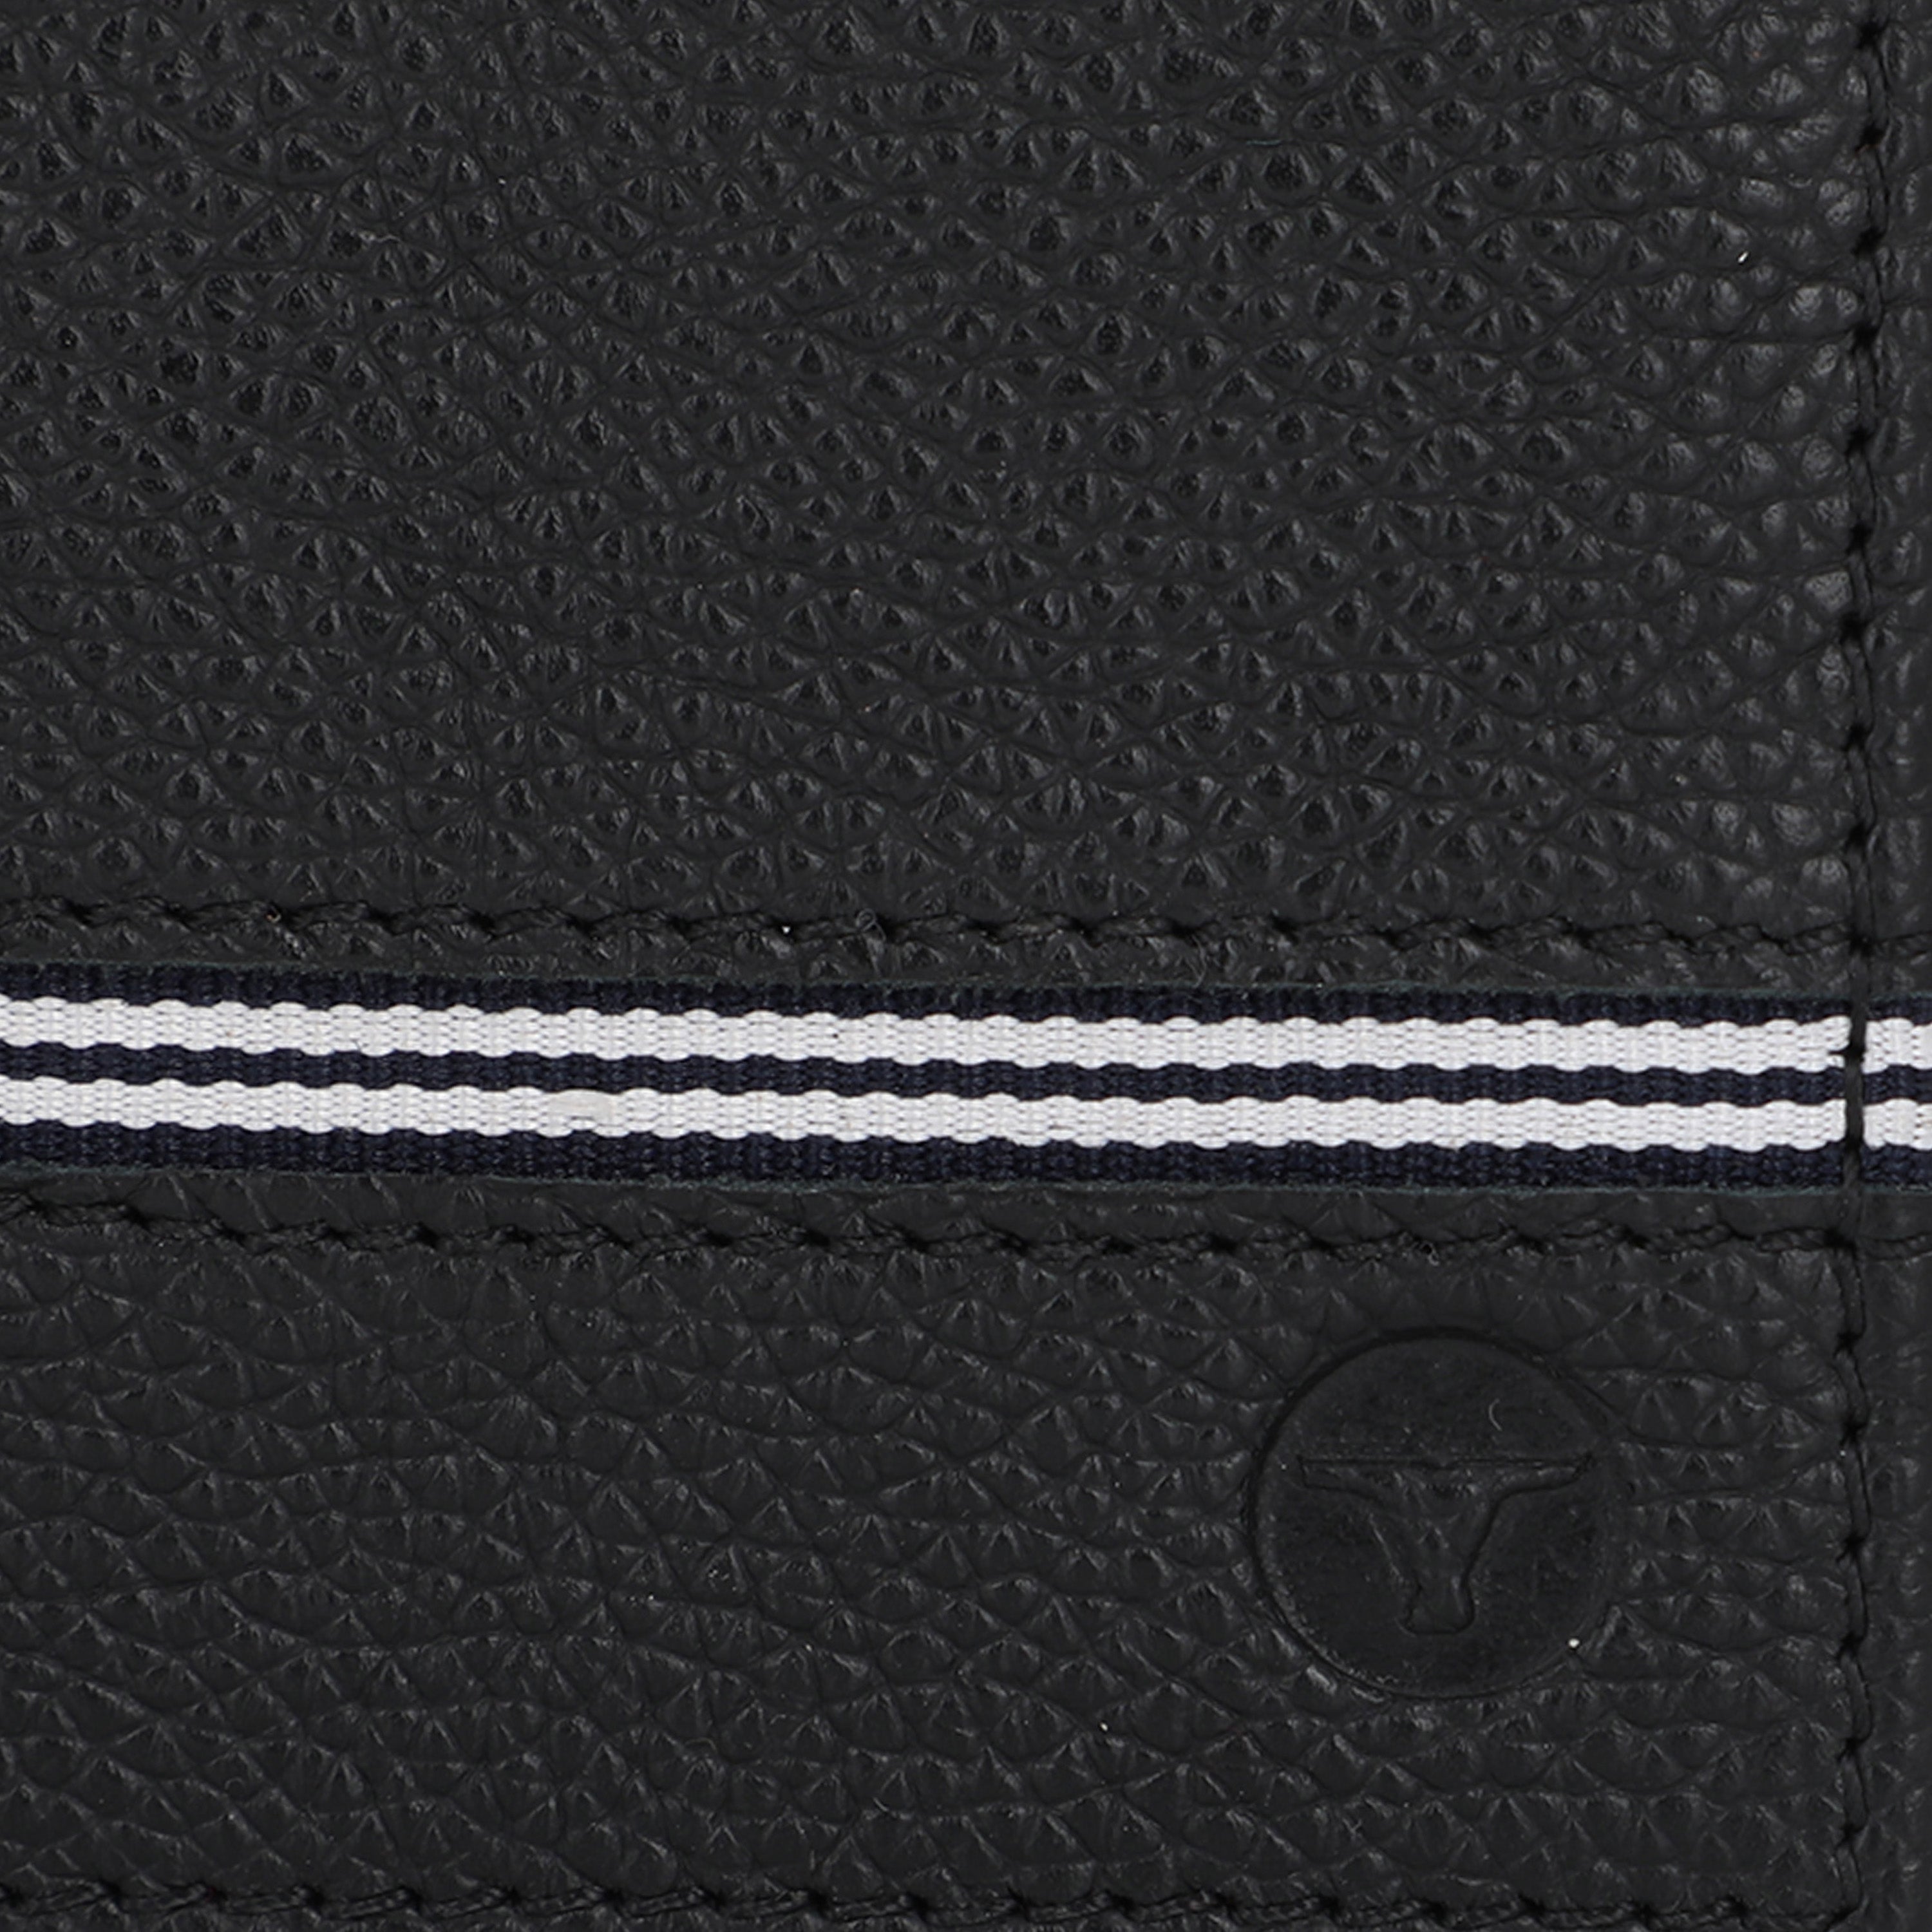 UFFICIO Men Genuine Leather Wallet